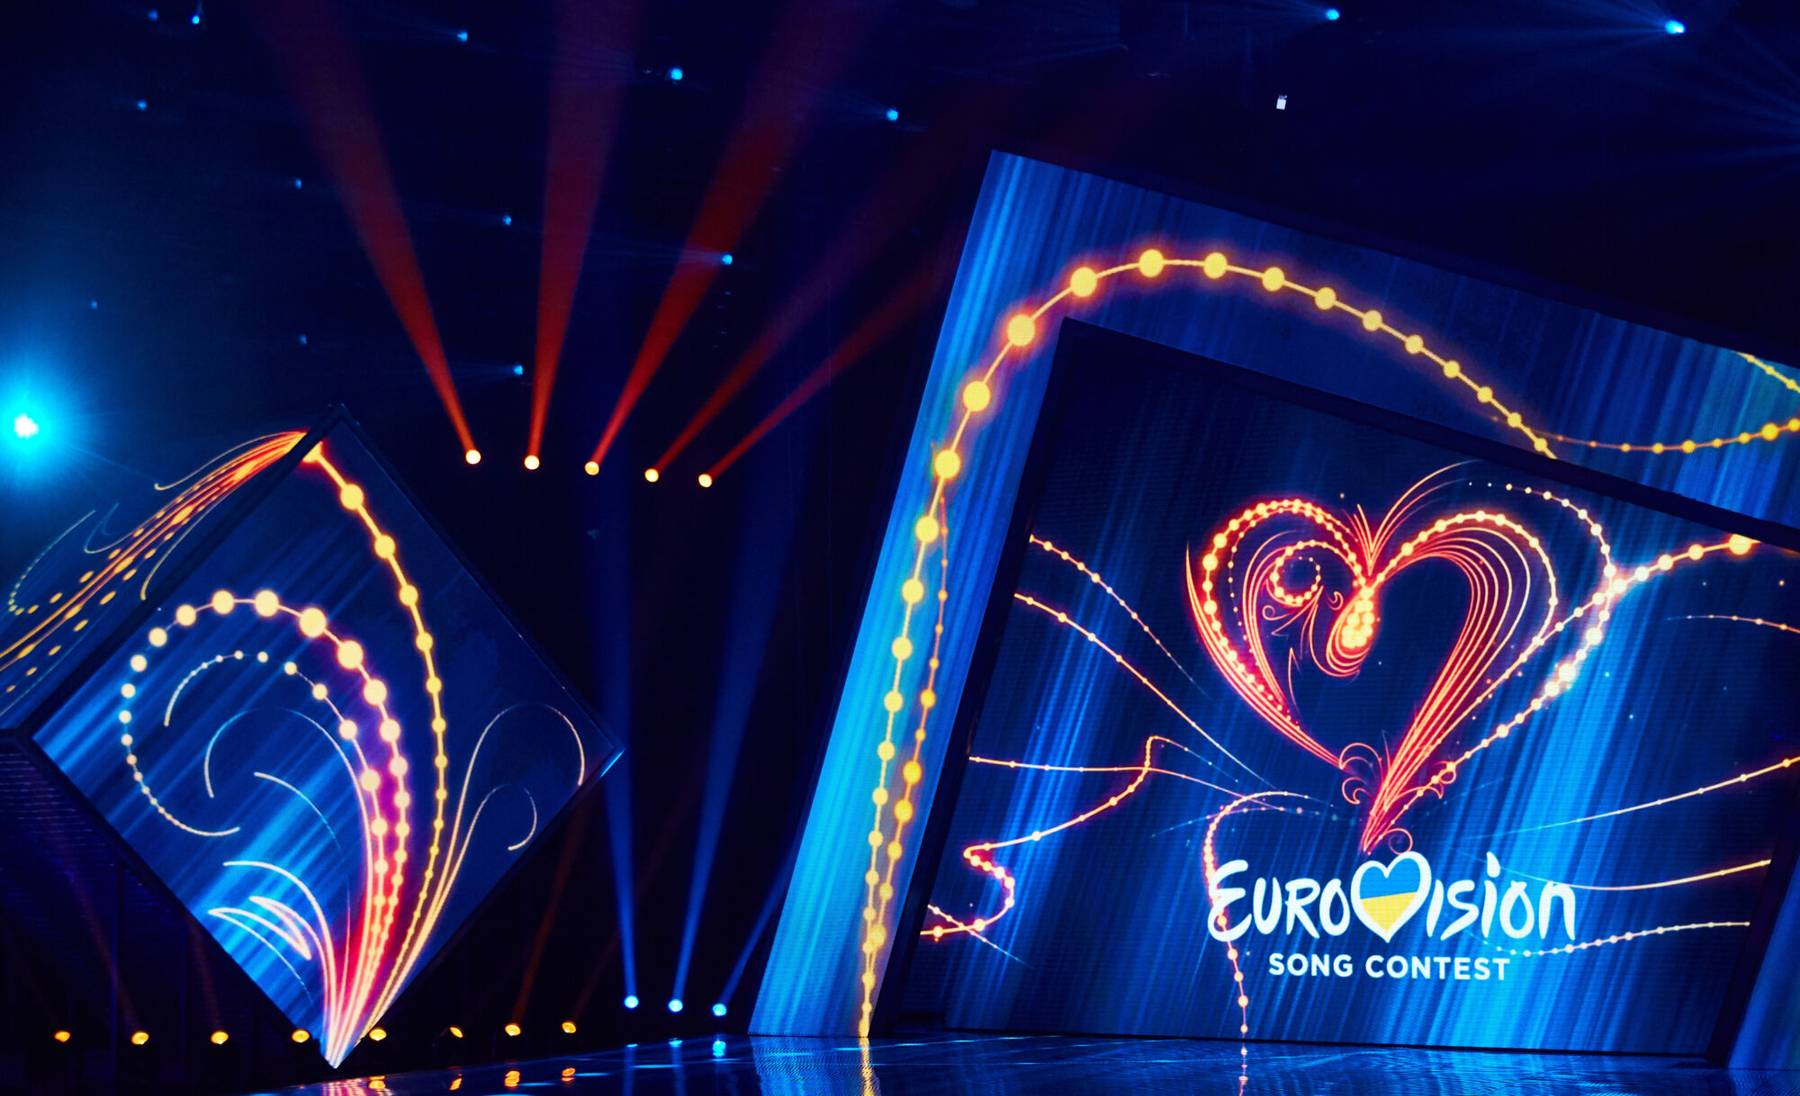 Eurovisioon